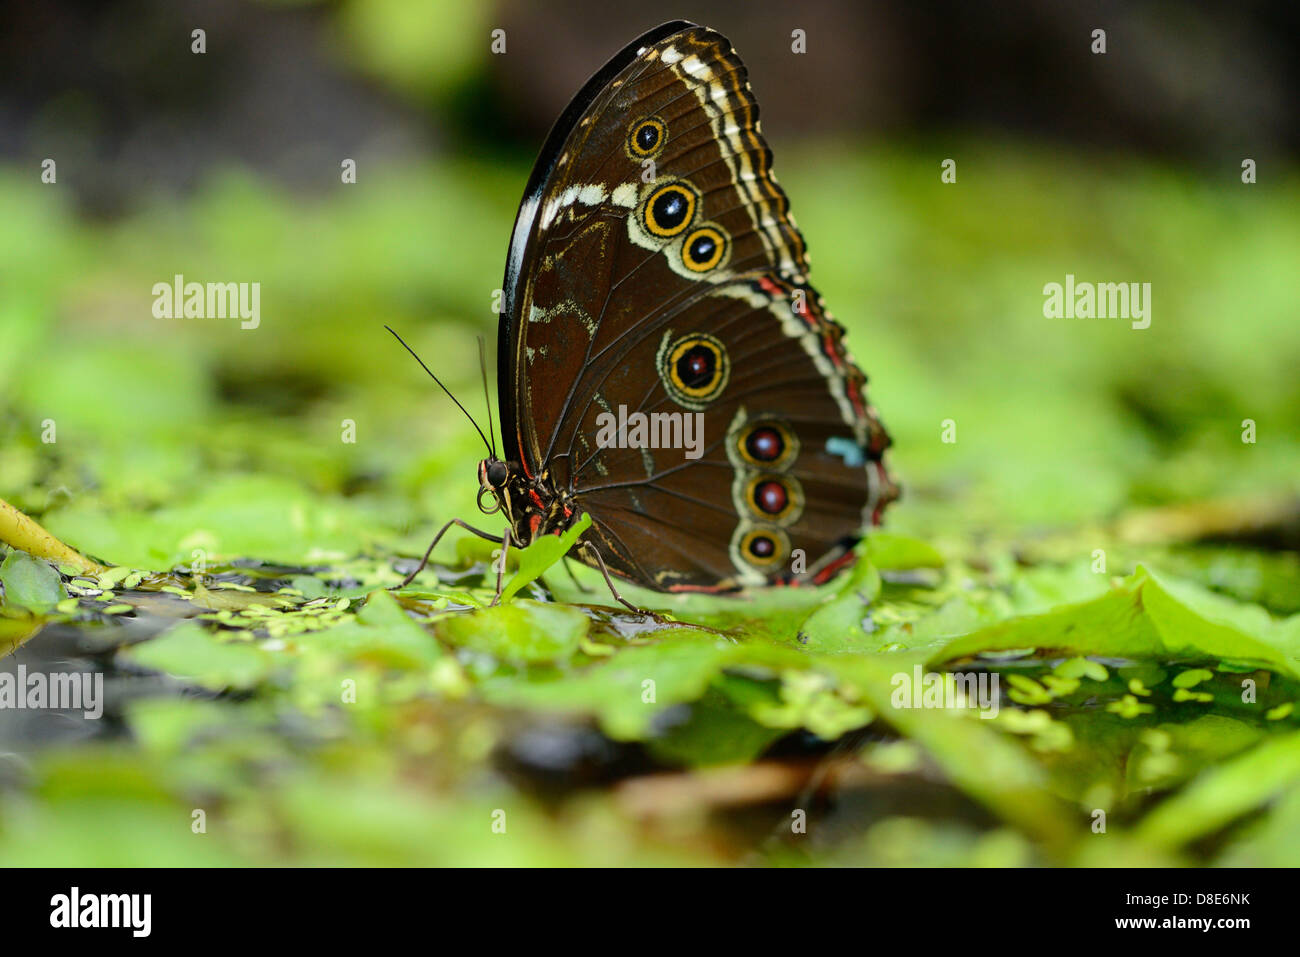 Butterfly Common Morpho (Morpho peleides) on a leaf Stock Photo